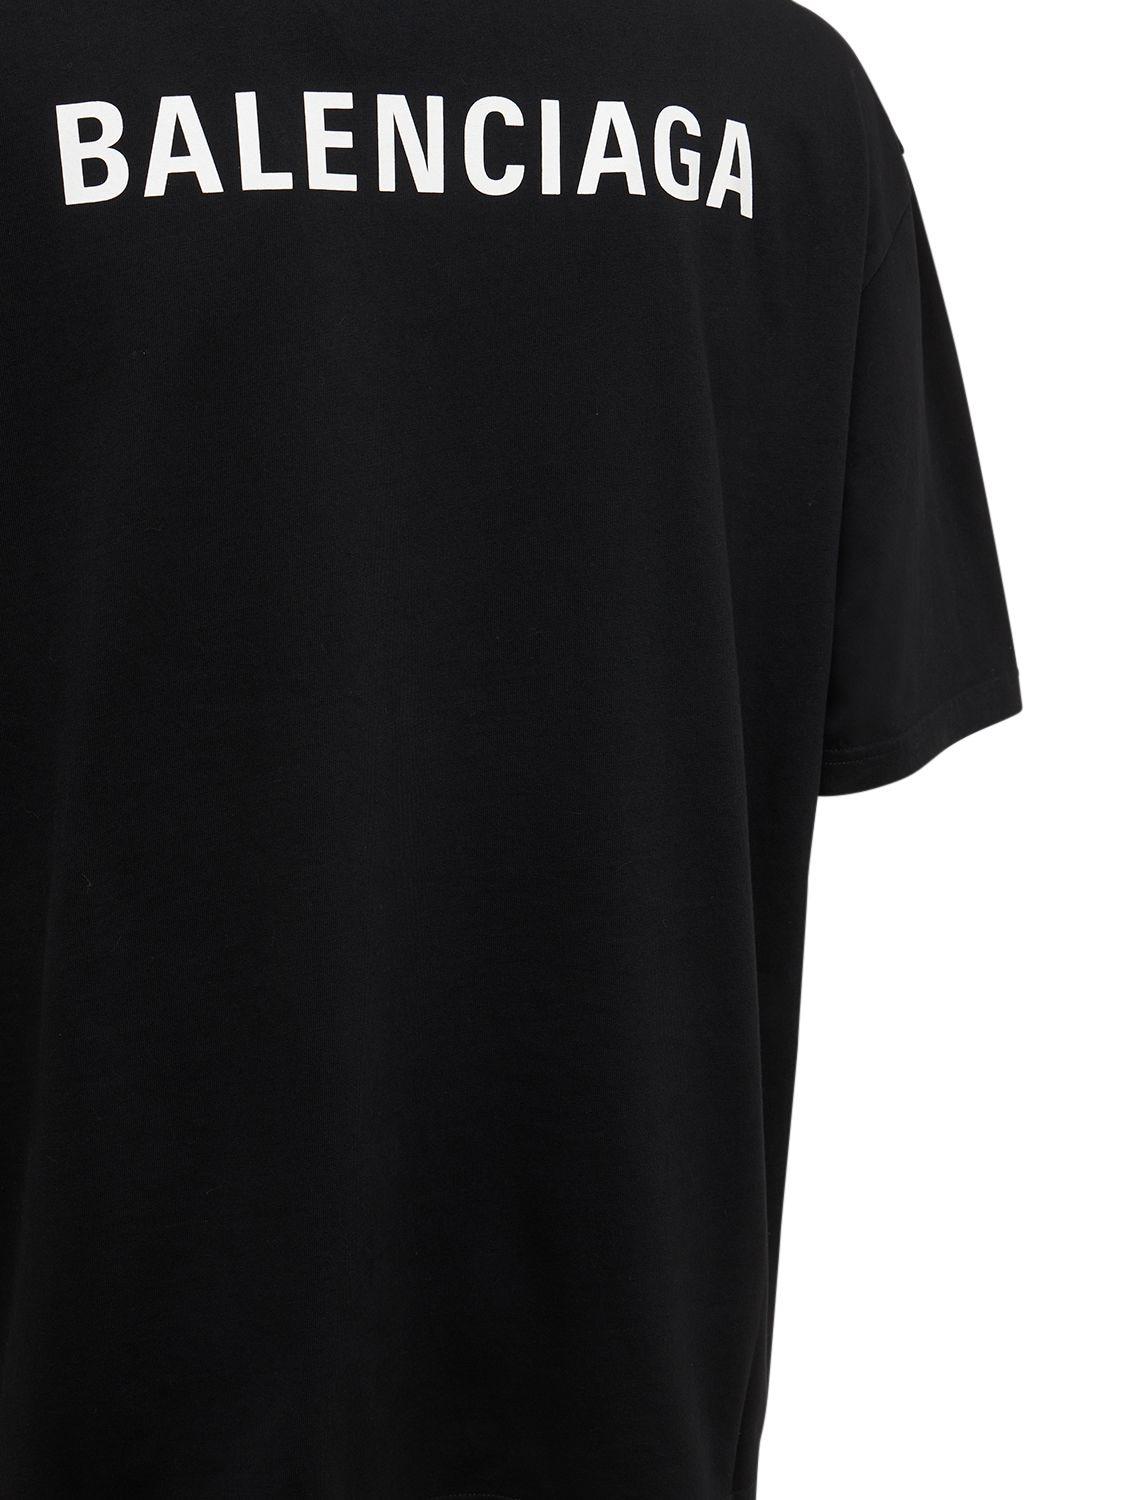 Balenciaga Logo Printed Cotton Jersey T-shirt in Black/White (Black) for  Men - Save 6% | Lyst